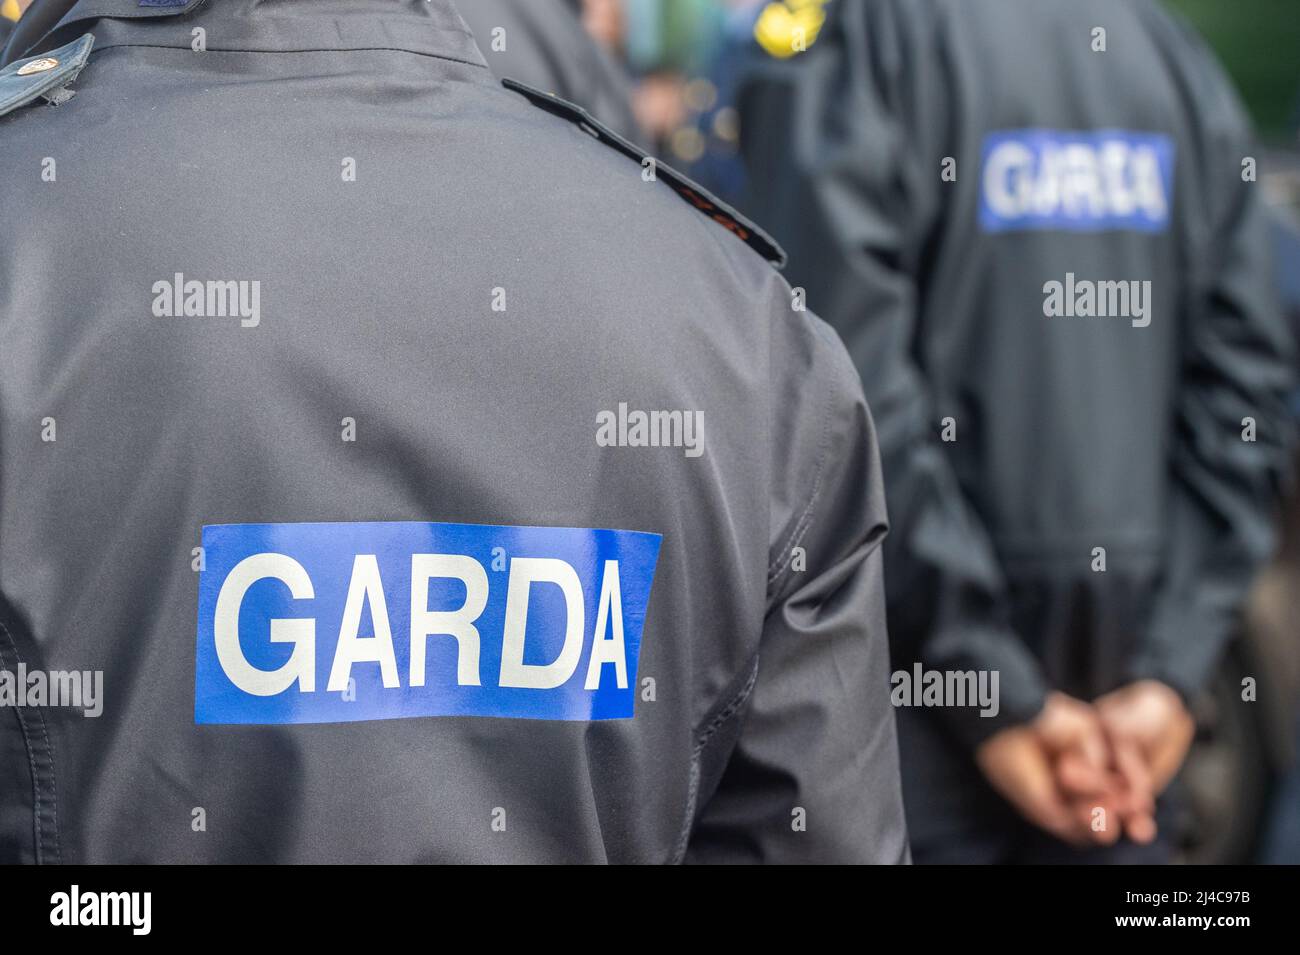 Members of An Garda Síochána (Irish Police Force) on parade in Ireland. Stock Photo